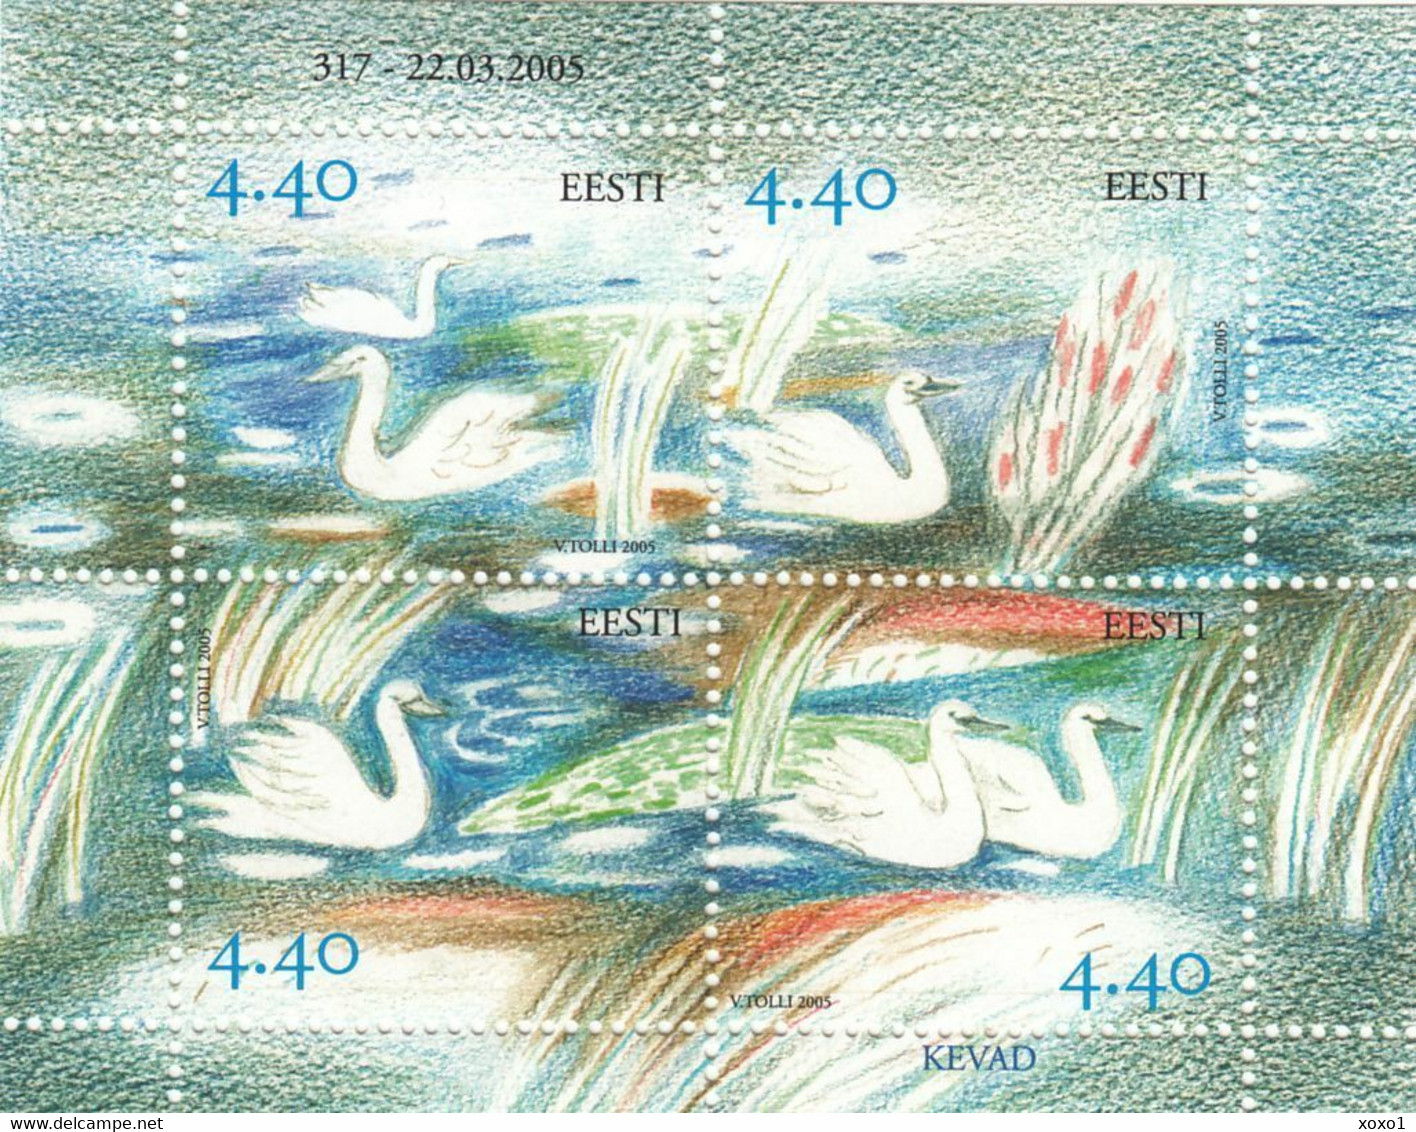 Estonia 2005 MiNr. 509 - 512(Block 22) Estland Birds Mute Swans Seasons Spring 1 S/sh MNH** 2.80 € - Cisnes